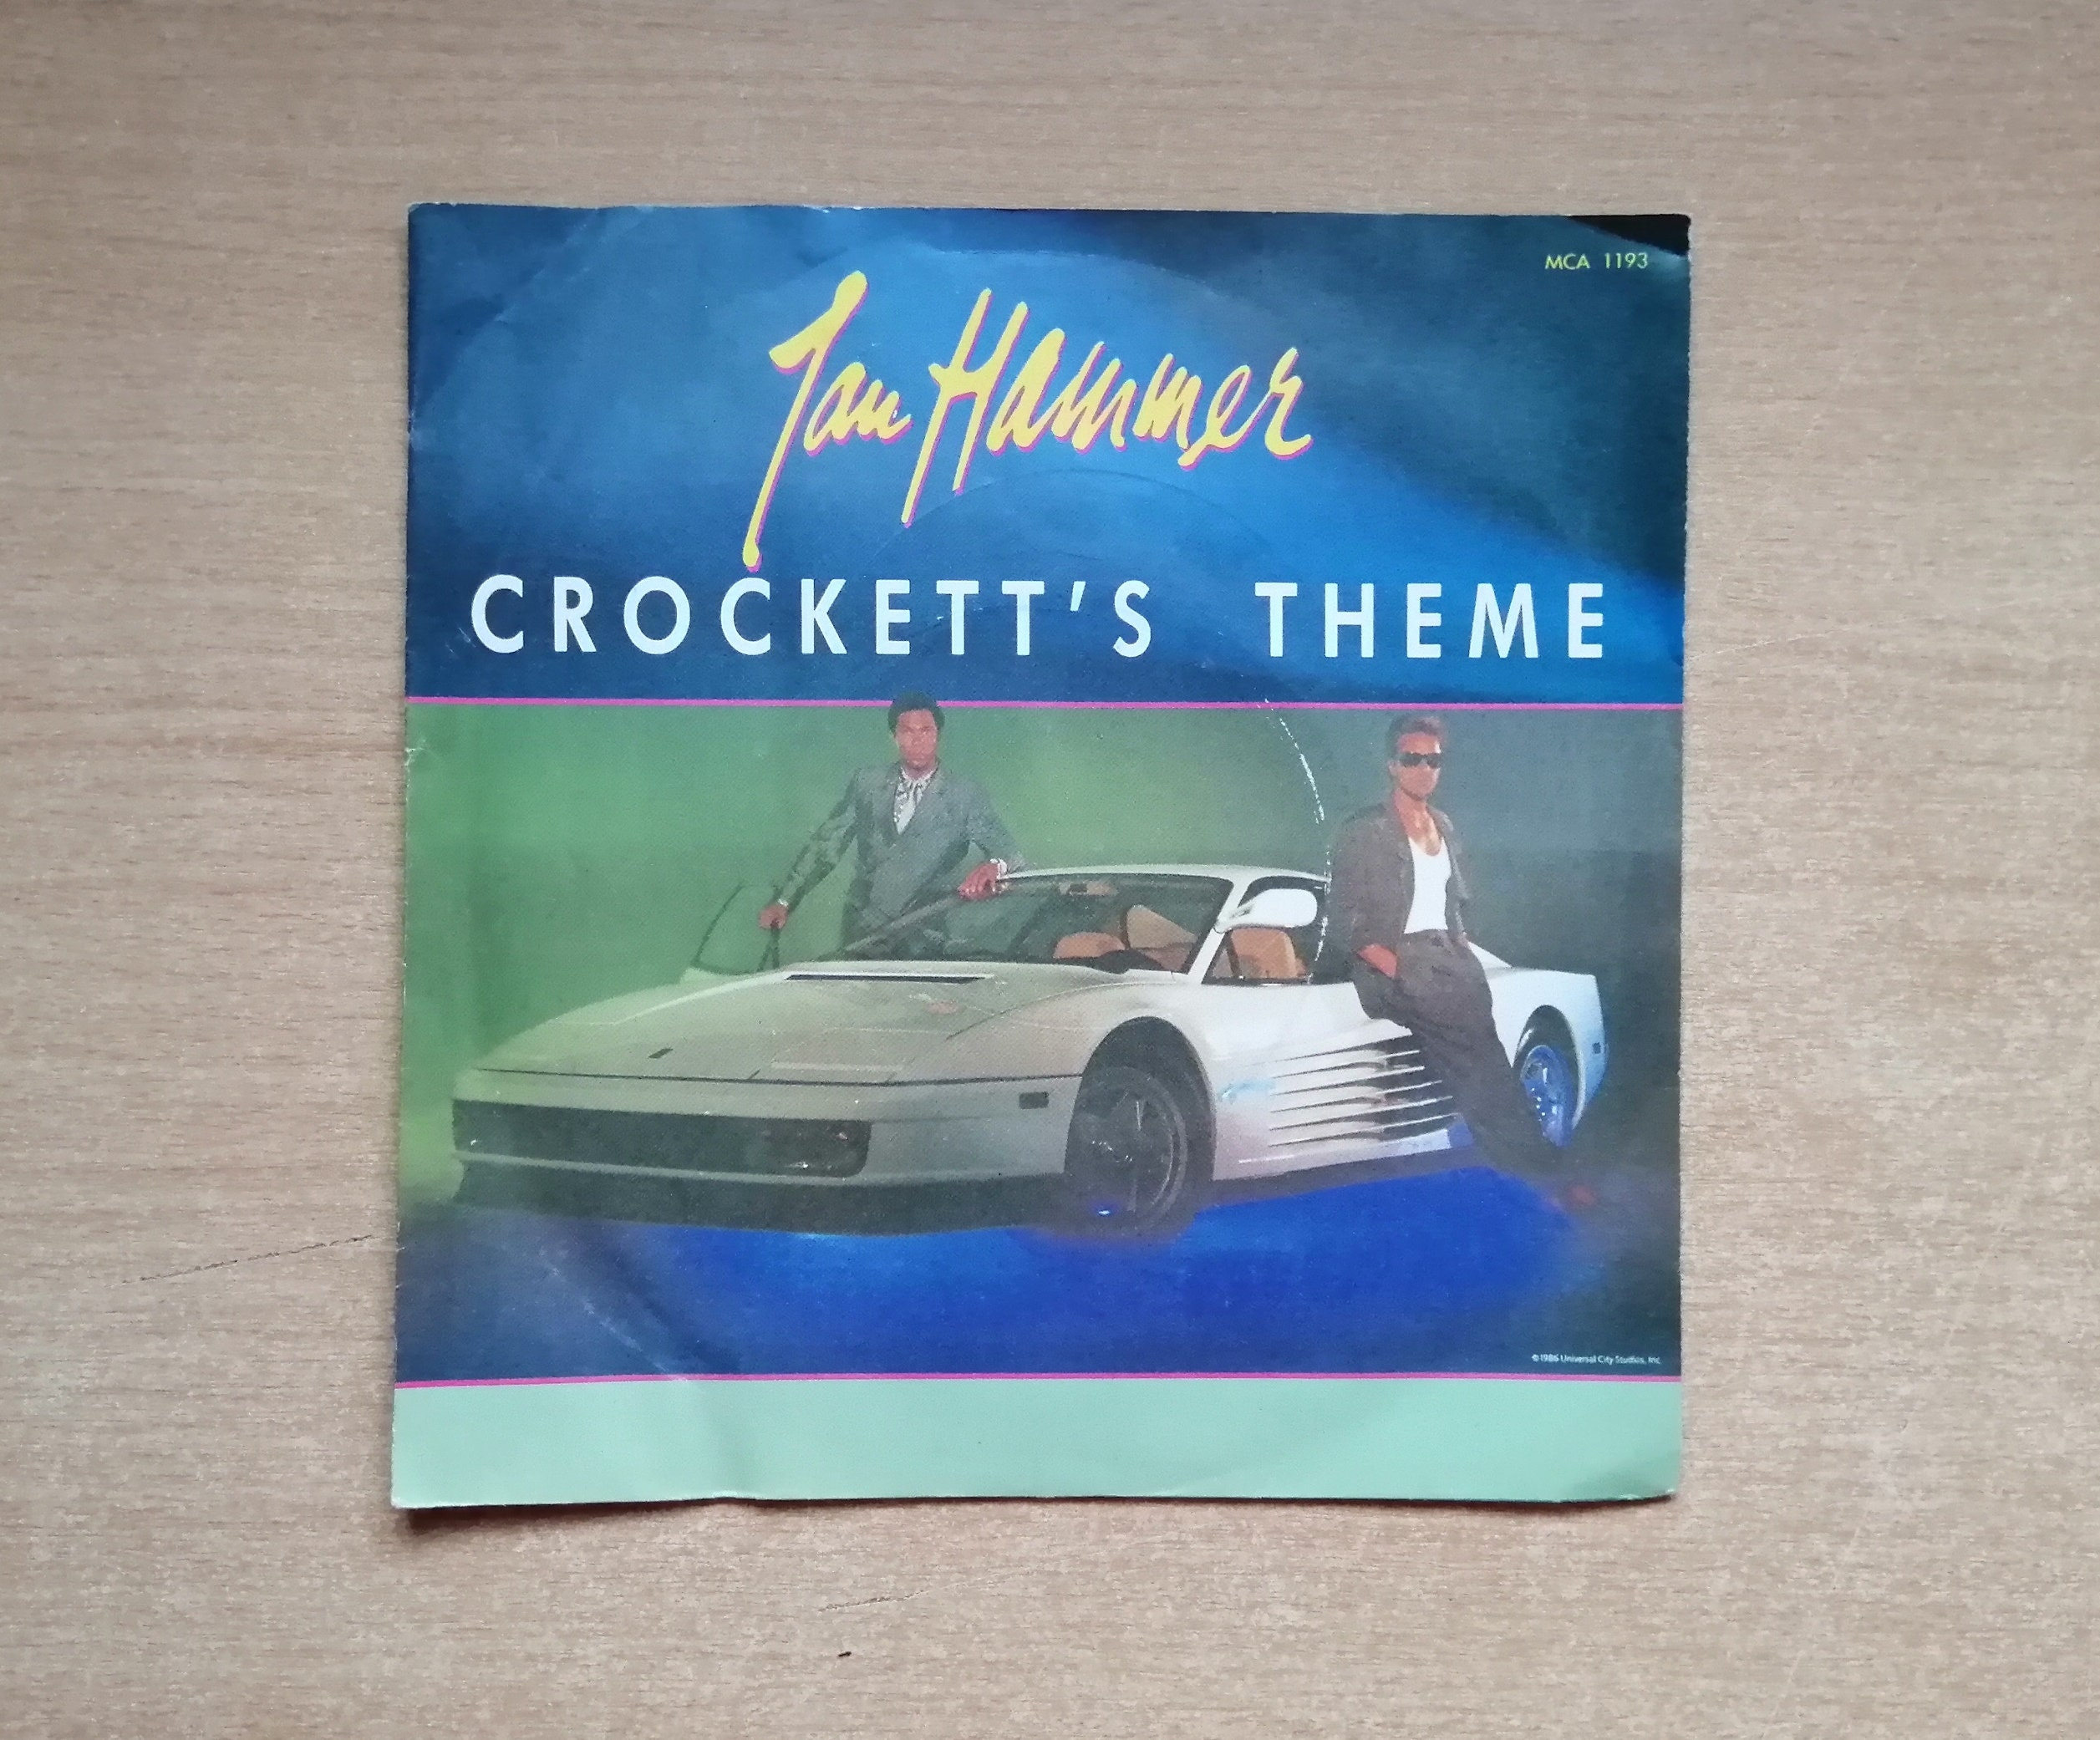 Miami Vice Vinyl Jan Hammer Crocket's Theme - Etsy Denmark